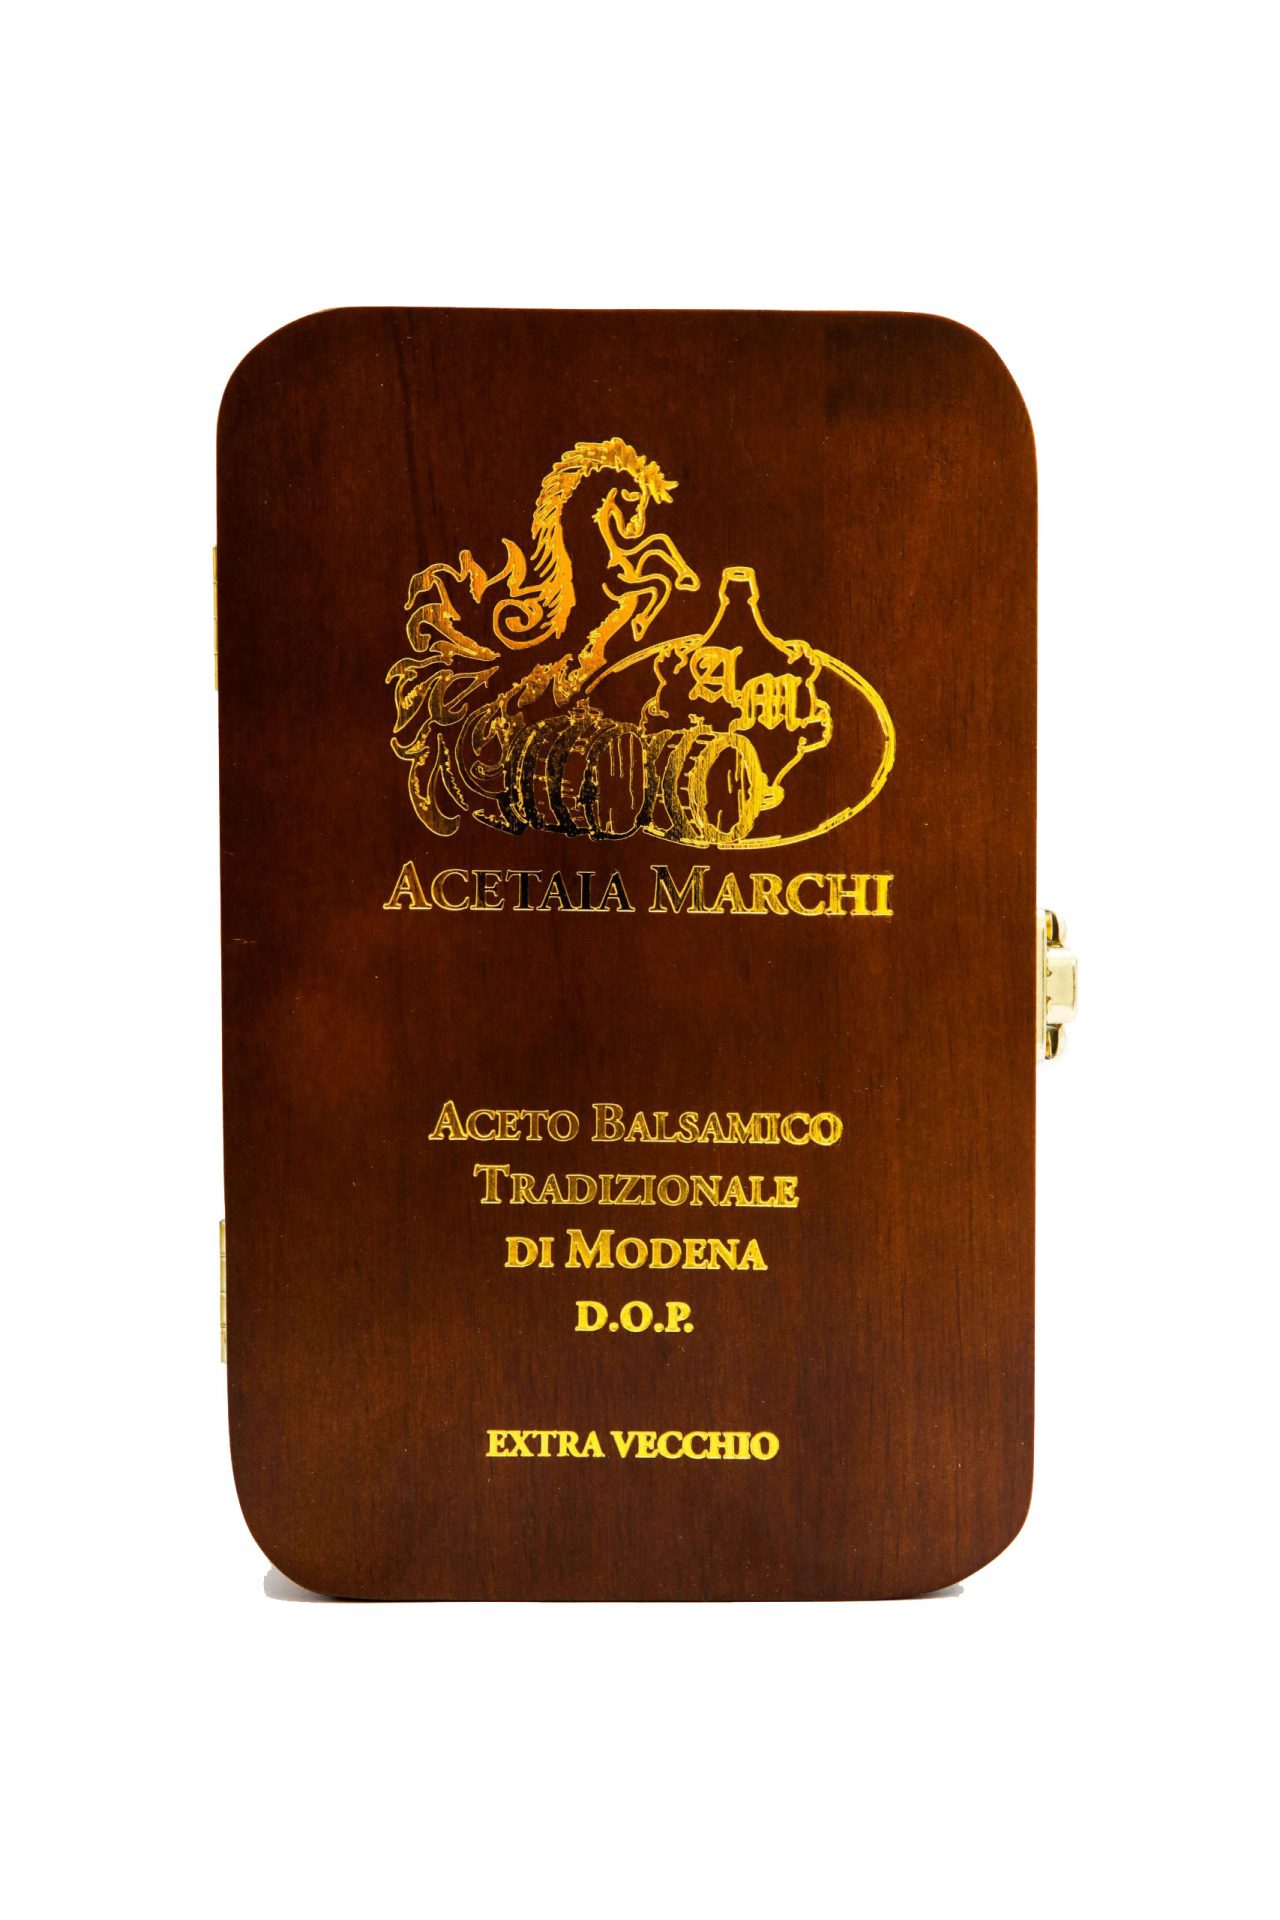 traditional-balsamic-vinegar-of-modena-dop-extravecchio-francesco-wood-box-written-gold